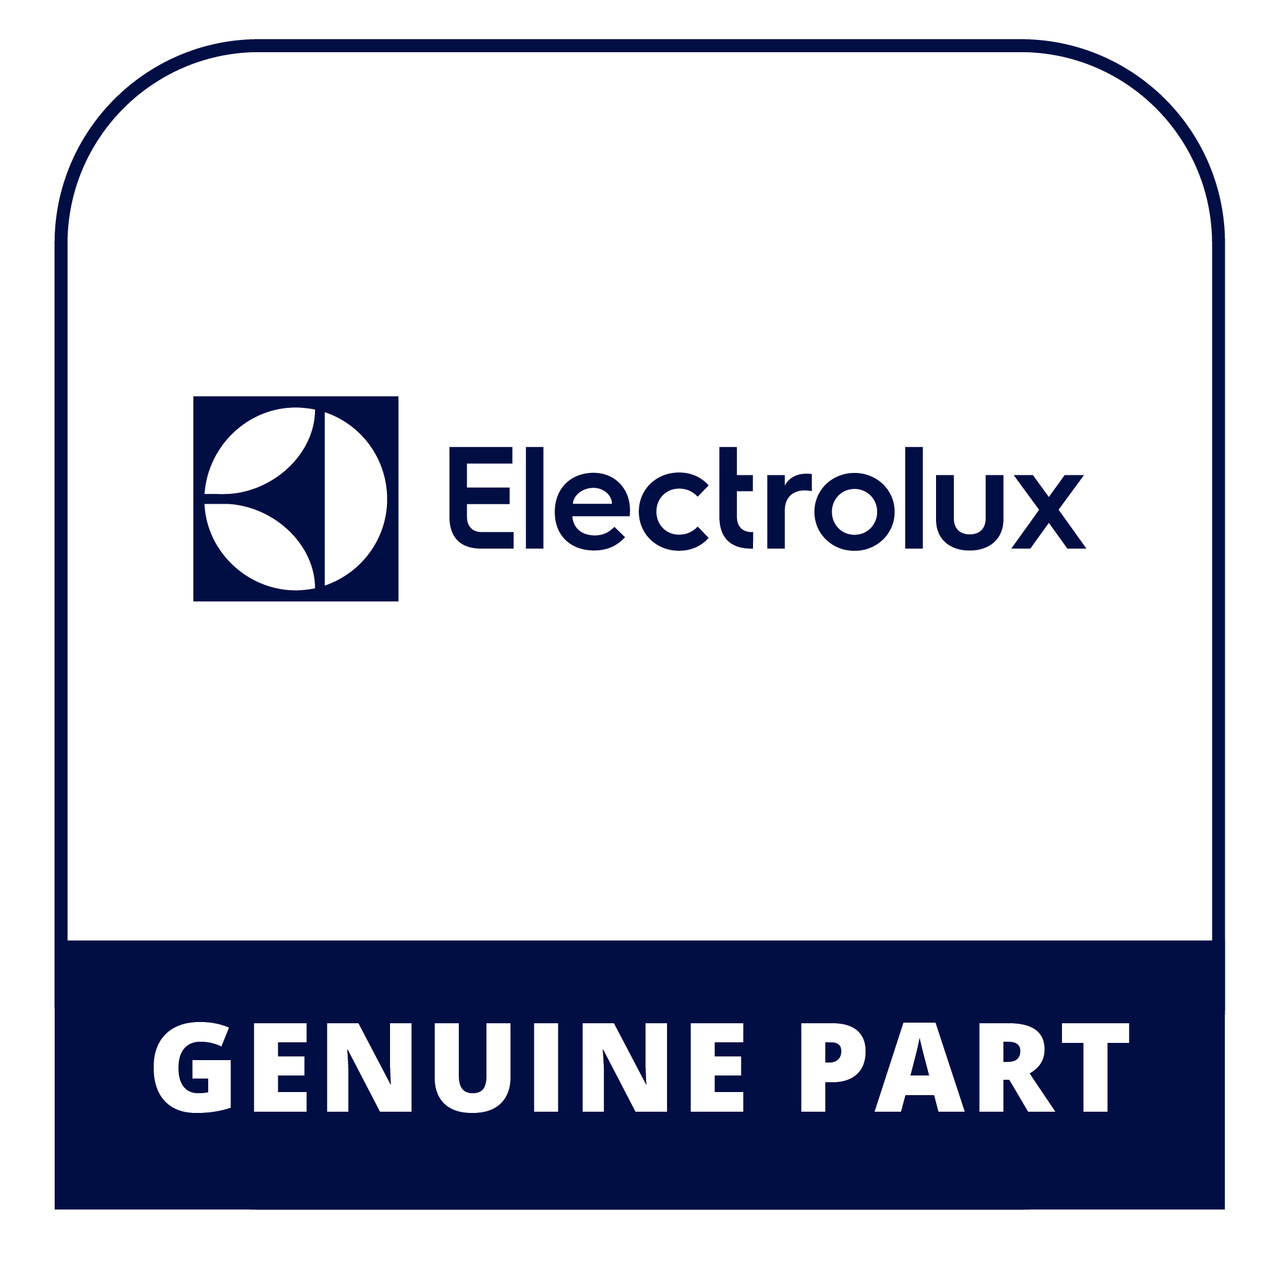 Frigidaire - Electrolux 5304495007 Panel - Genuine Electrolux Part